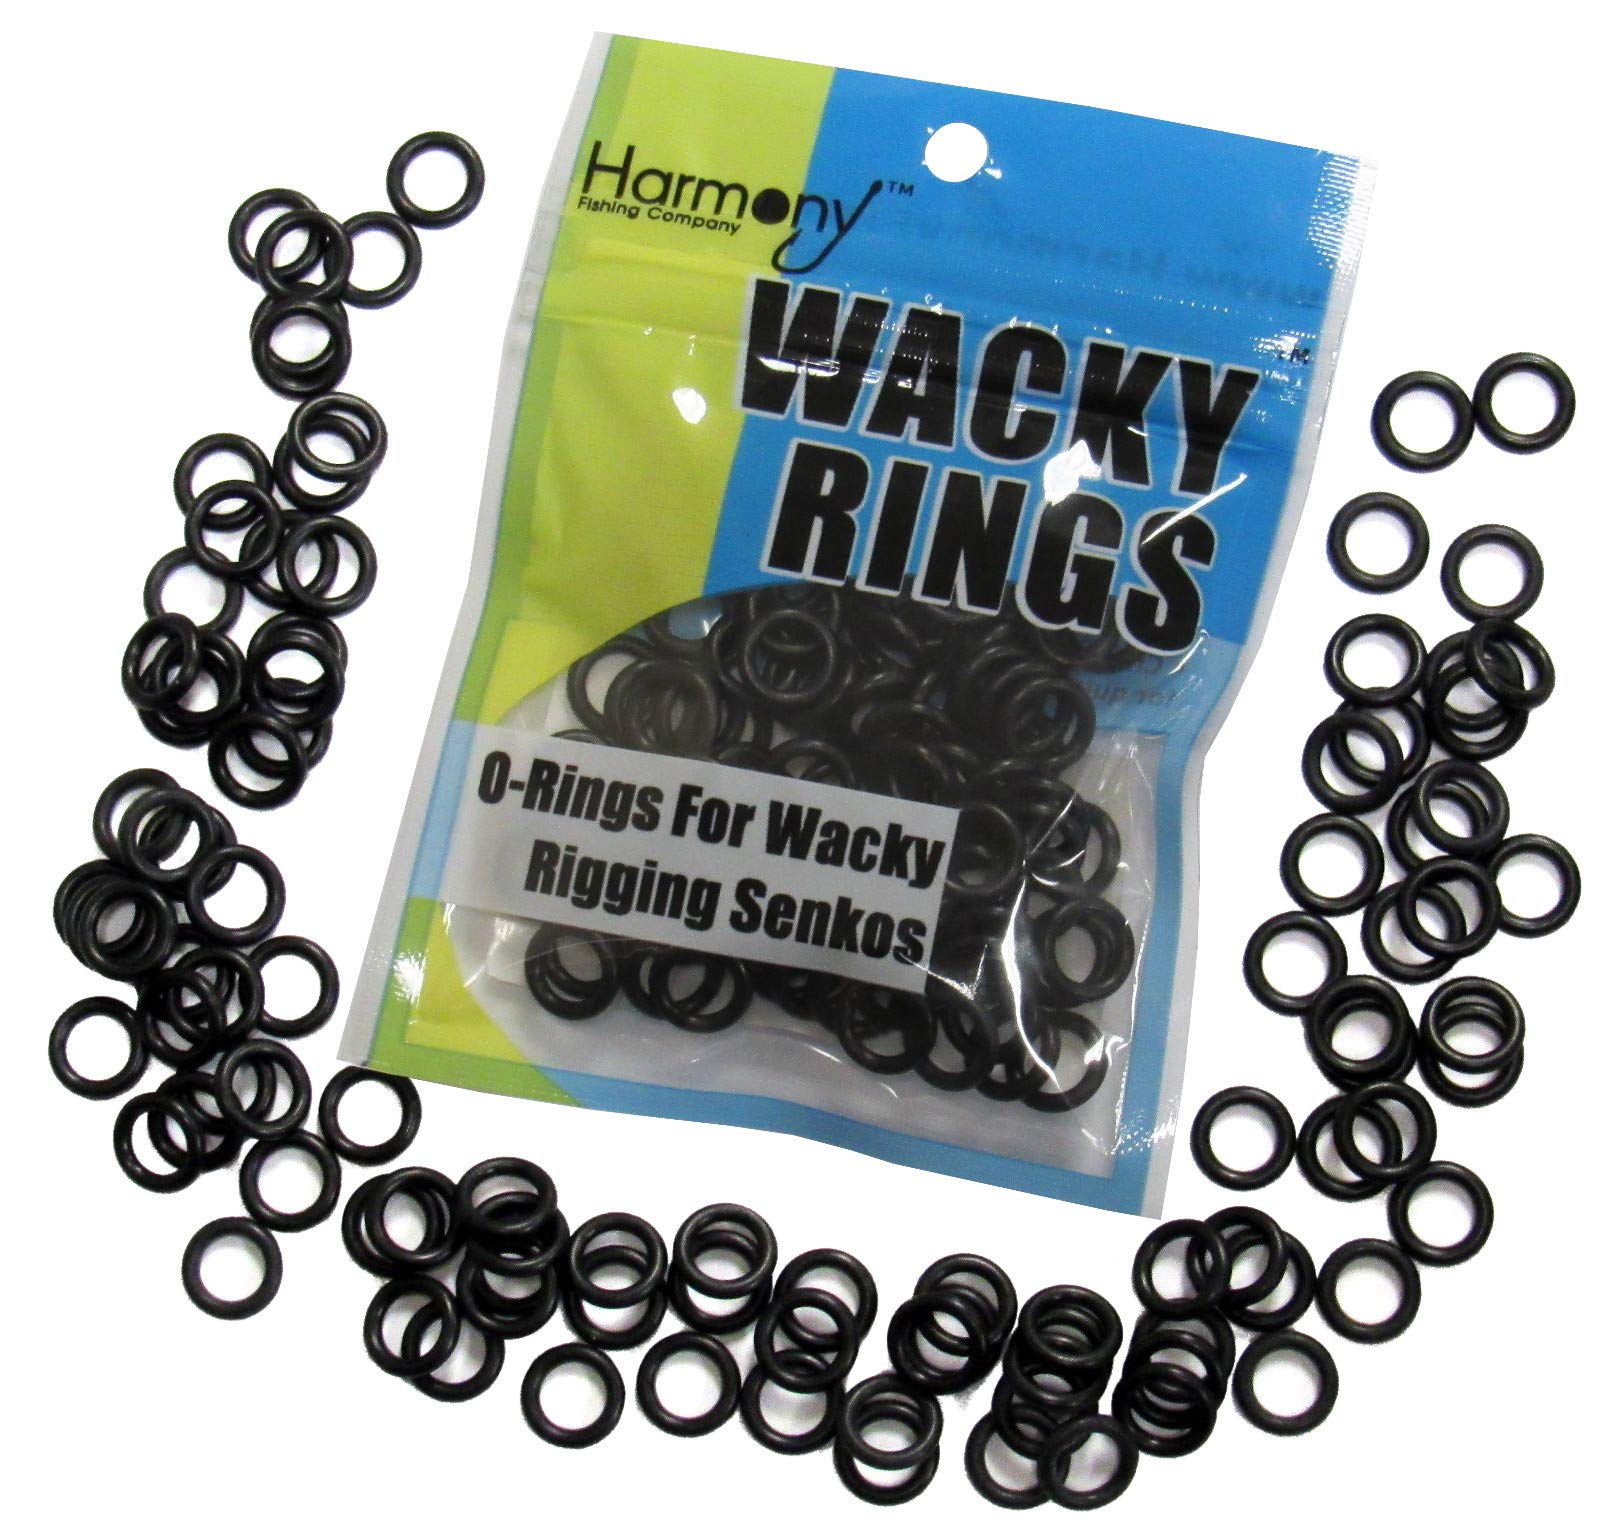 Wacky Rings (100 pk - O-Rings for Wacky Rigging Senko Worms/Soft Stickbaits  Bait Saver Orings